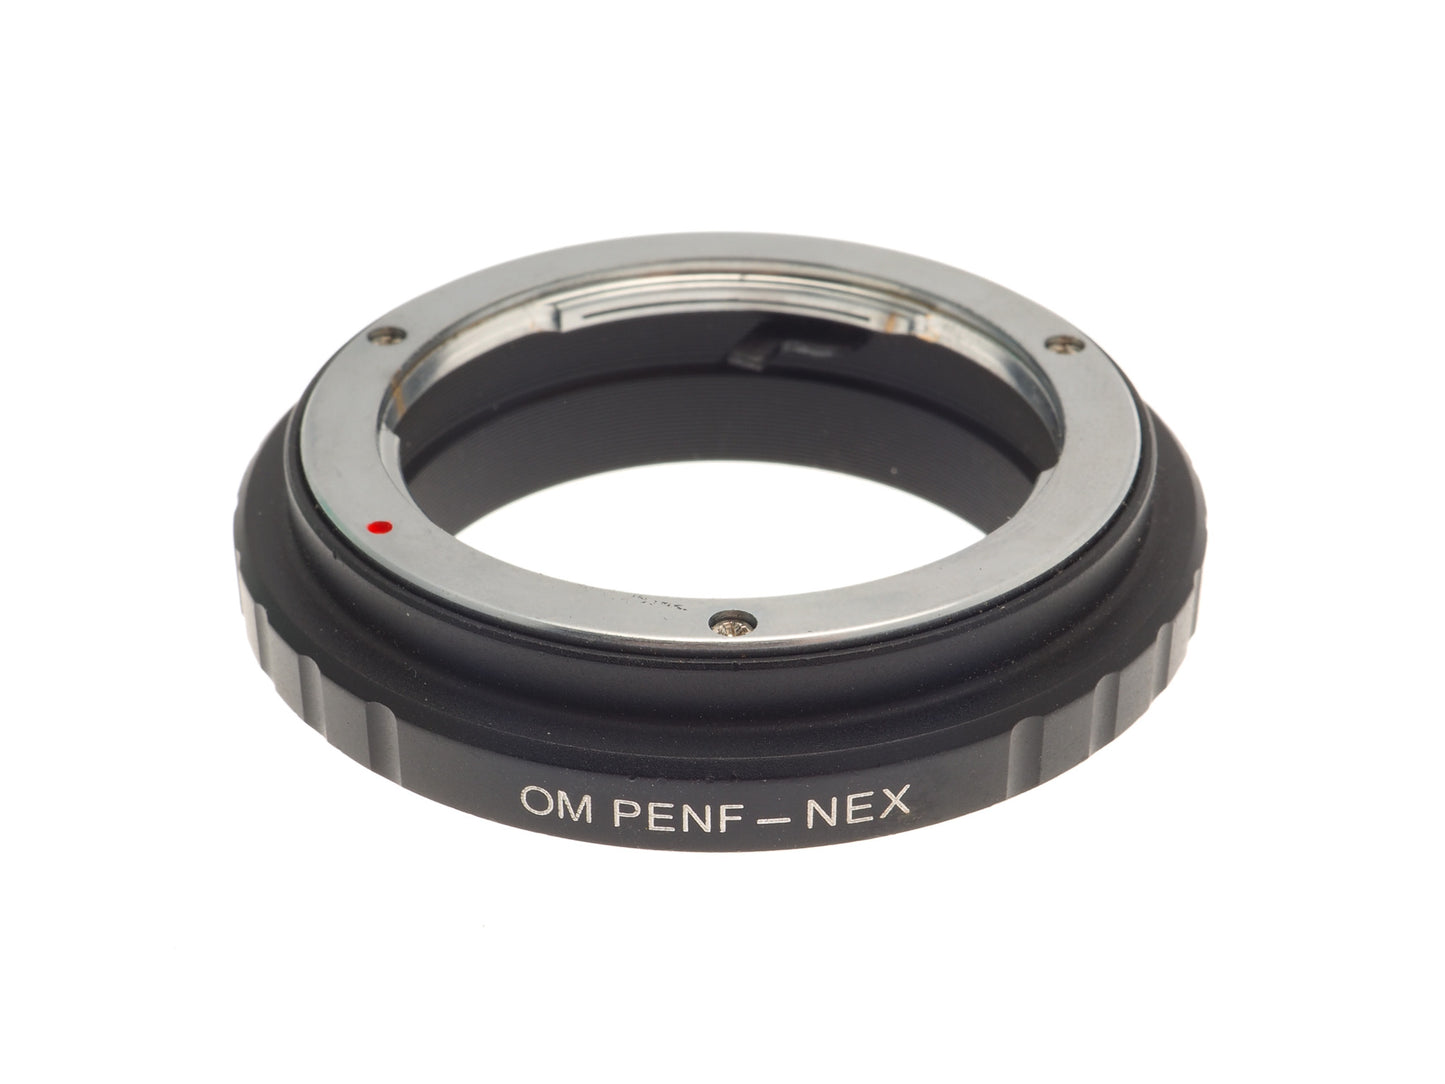 Generic Olympus Pen F - Sony E (PEN F - NEX) Adapter - Lens Adapter